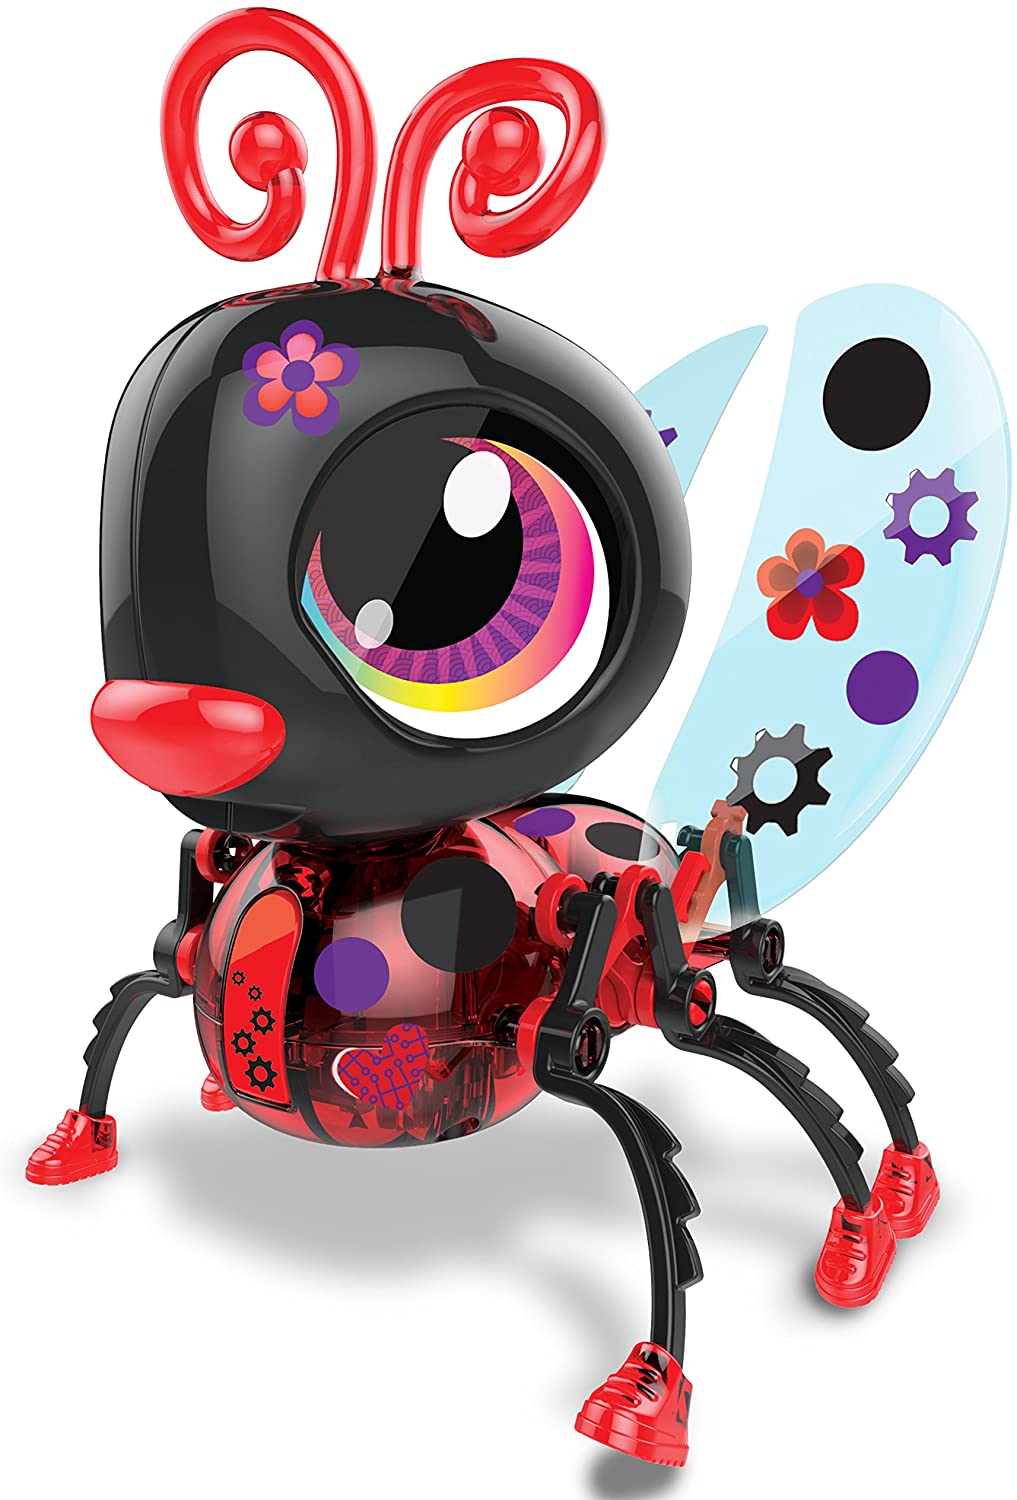 Build a Bug Robot Toy Ladybug